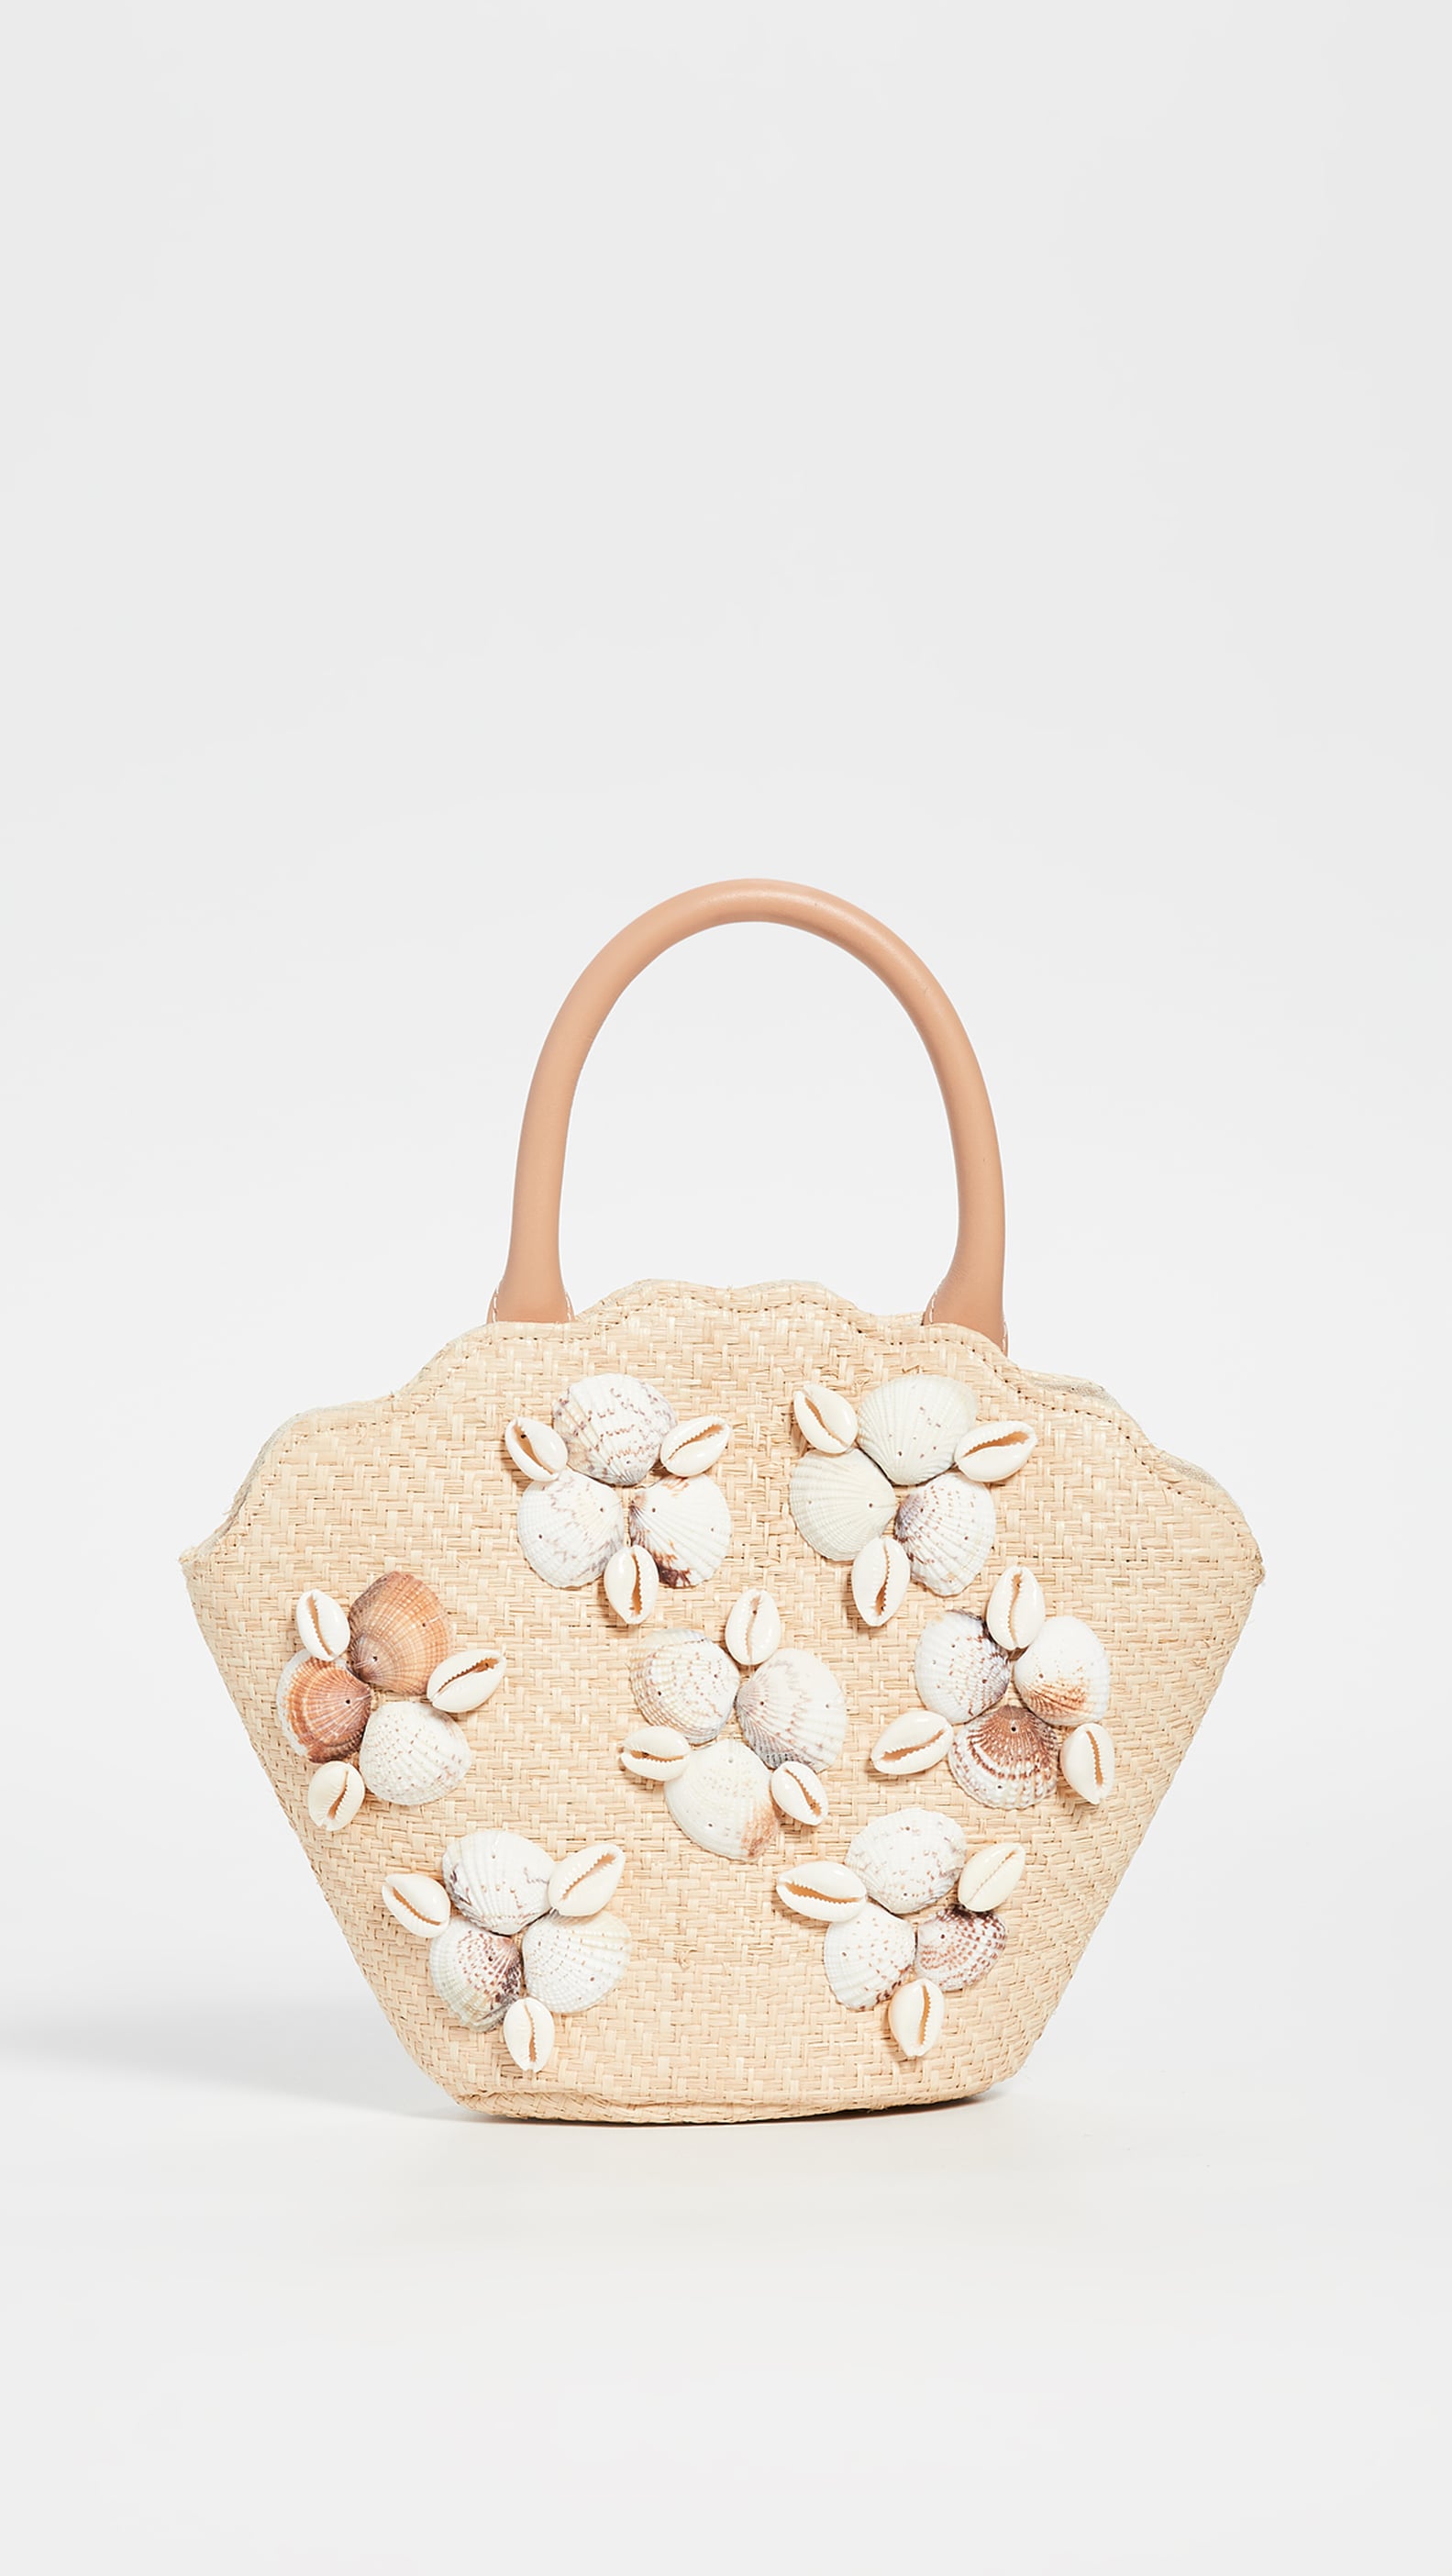 Gigi Hadid Michael Kors Dress and Seashell Bag 2019 | POPSUGAR Fashion